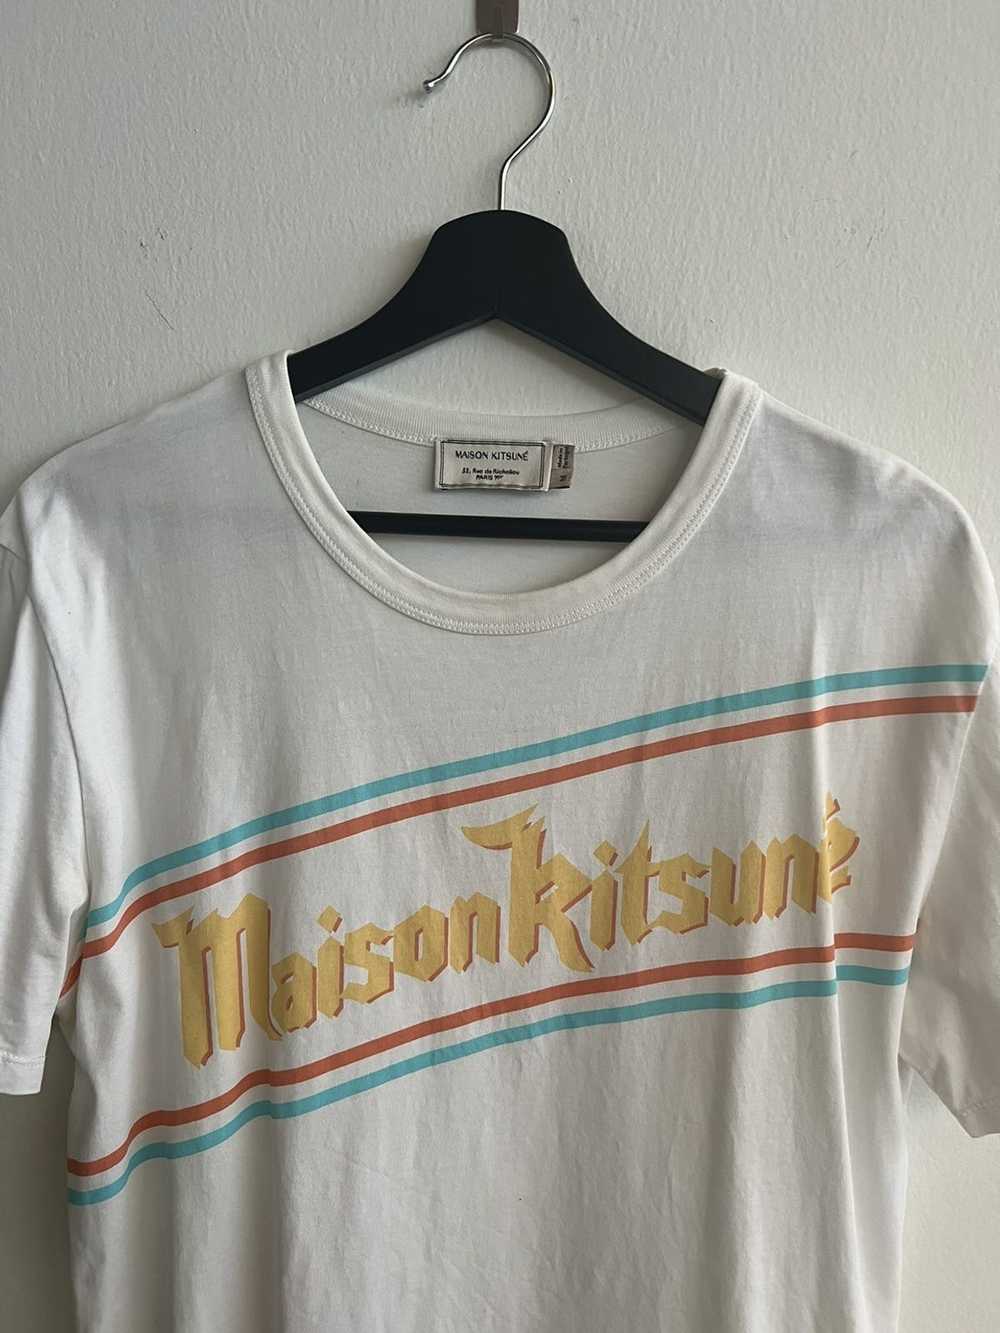 Maison Kitsune SS16 T shirt - image 2